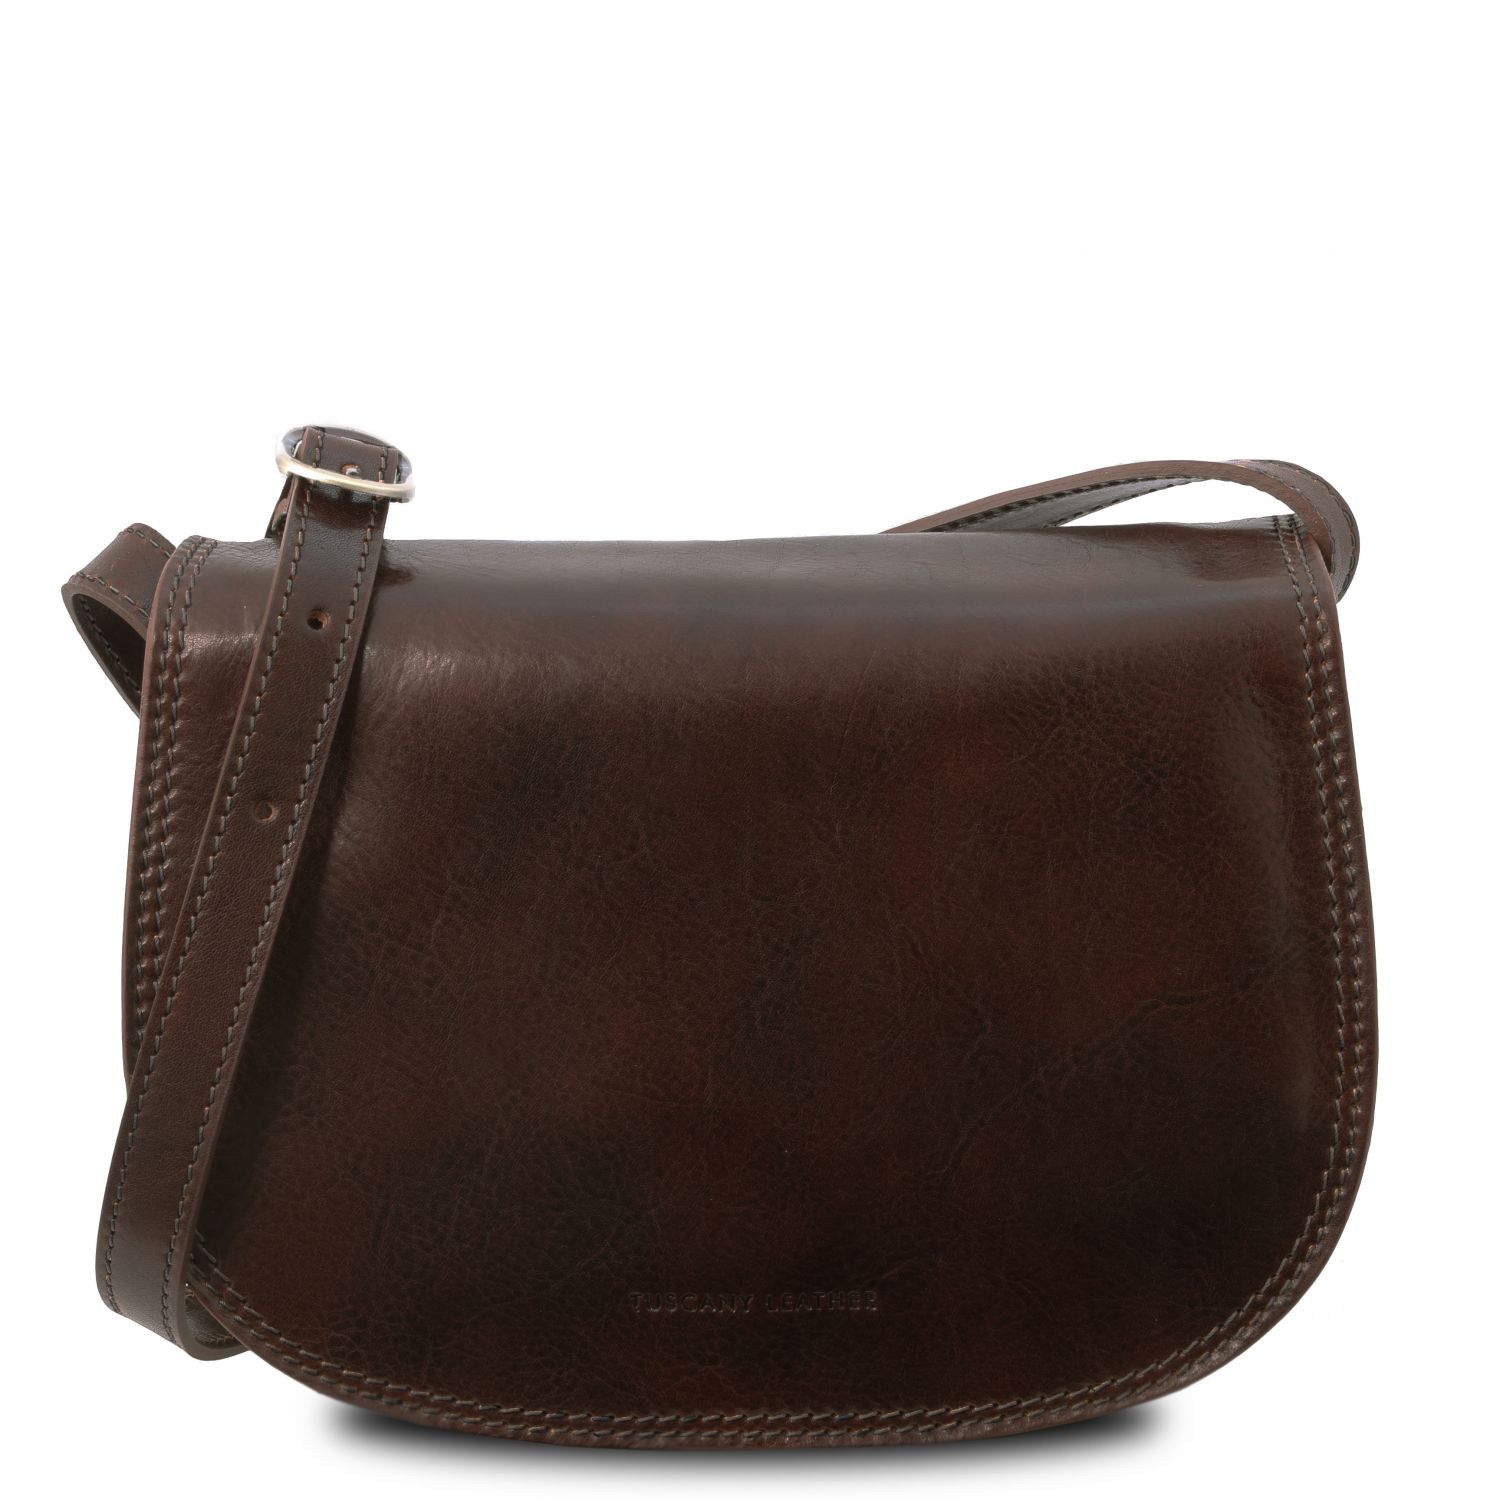 Isabella - Lady Leather bag Dark Brown TL9031